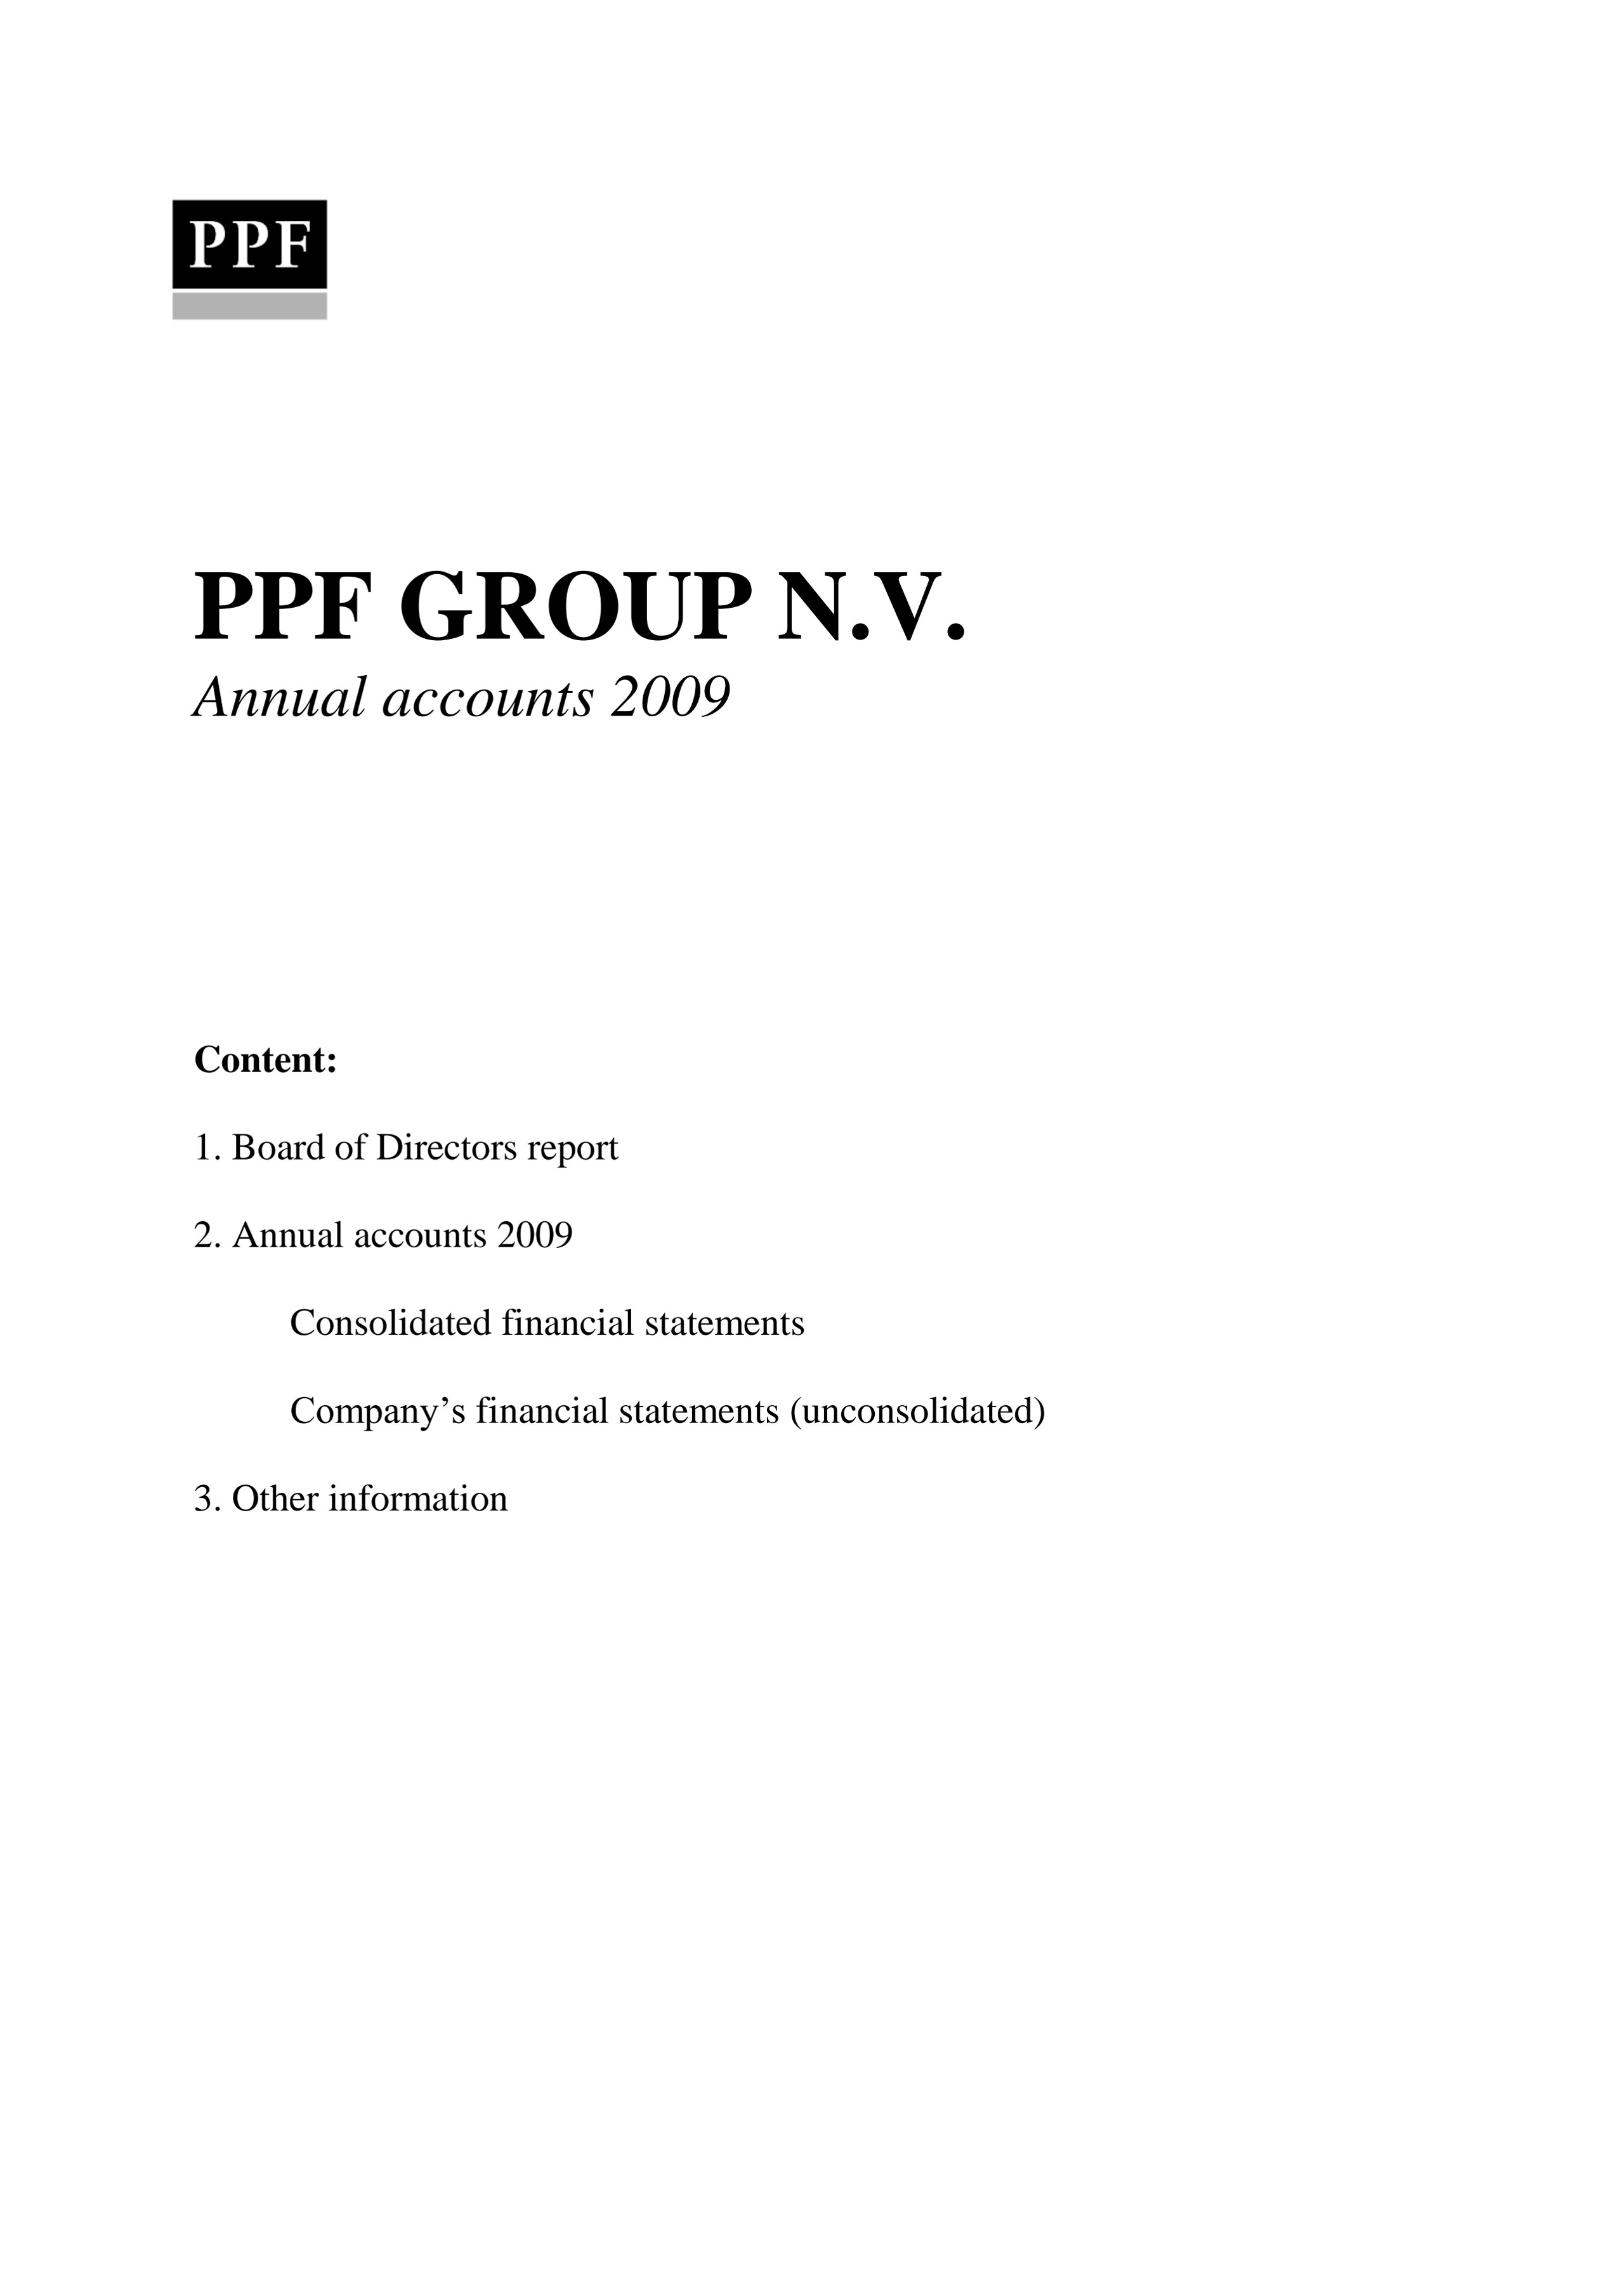 Annual Accounts PPF Group N.V. 2009 (25/5/2009)